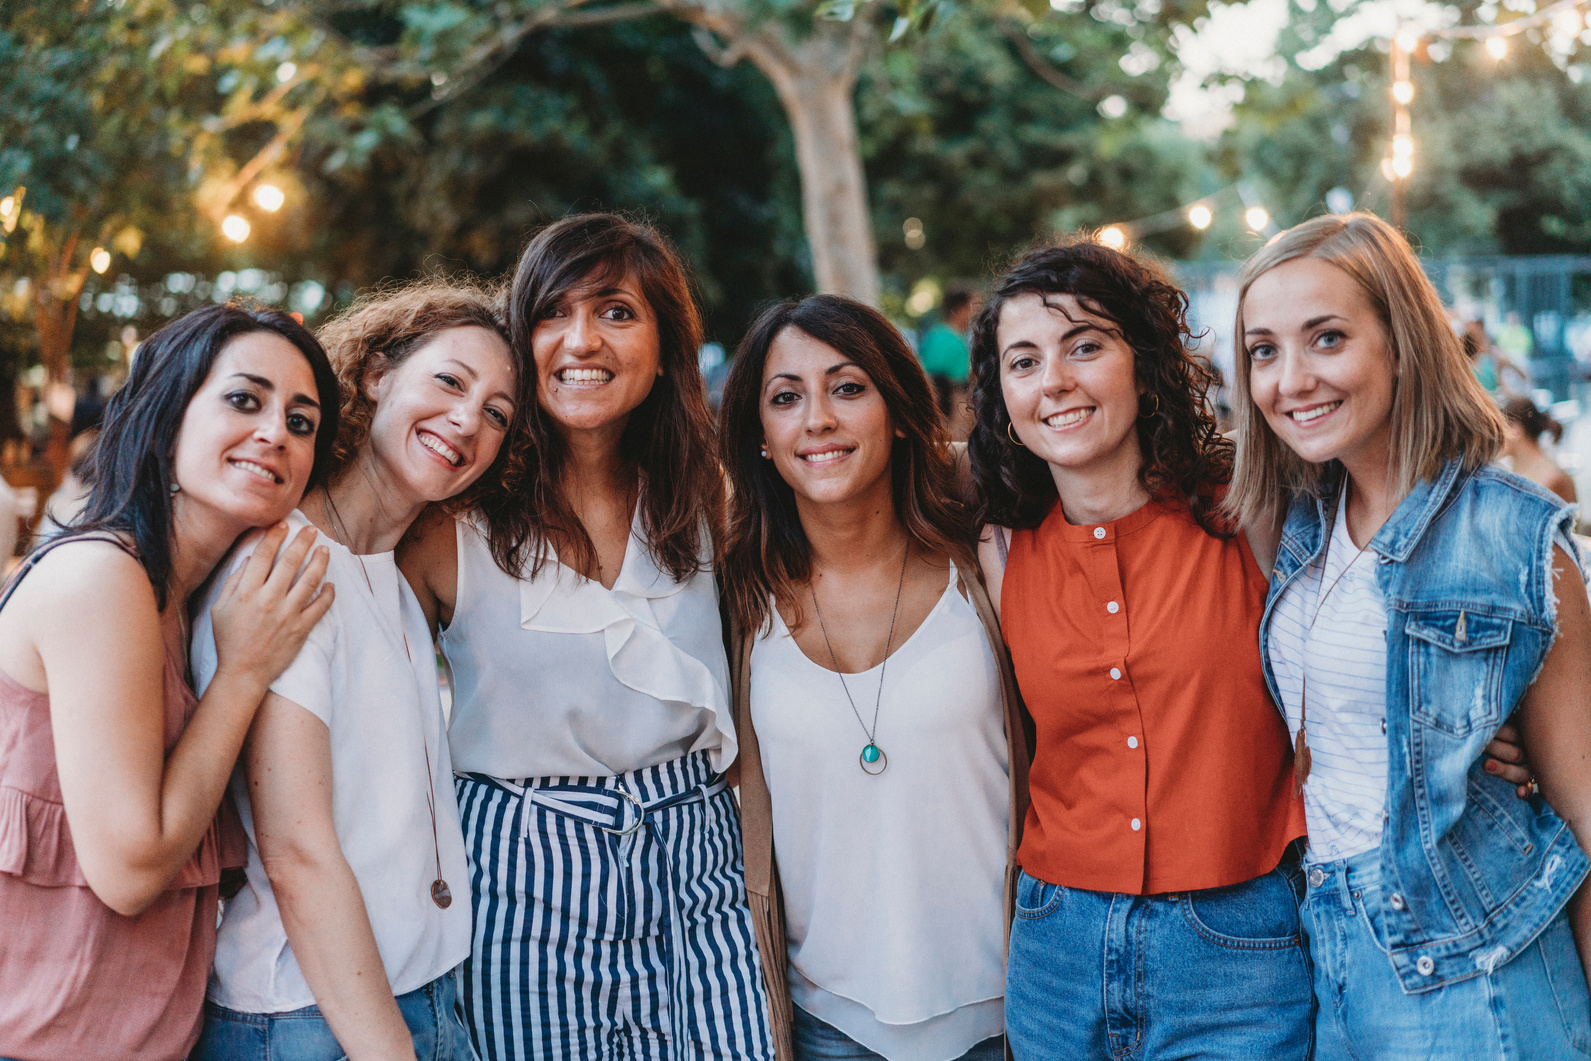 Group photo of six women friends